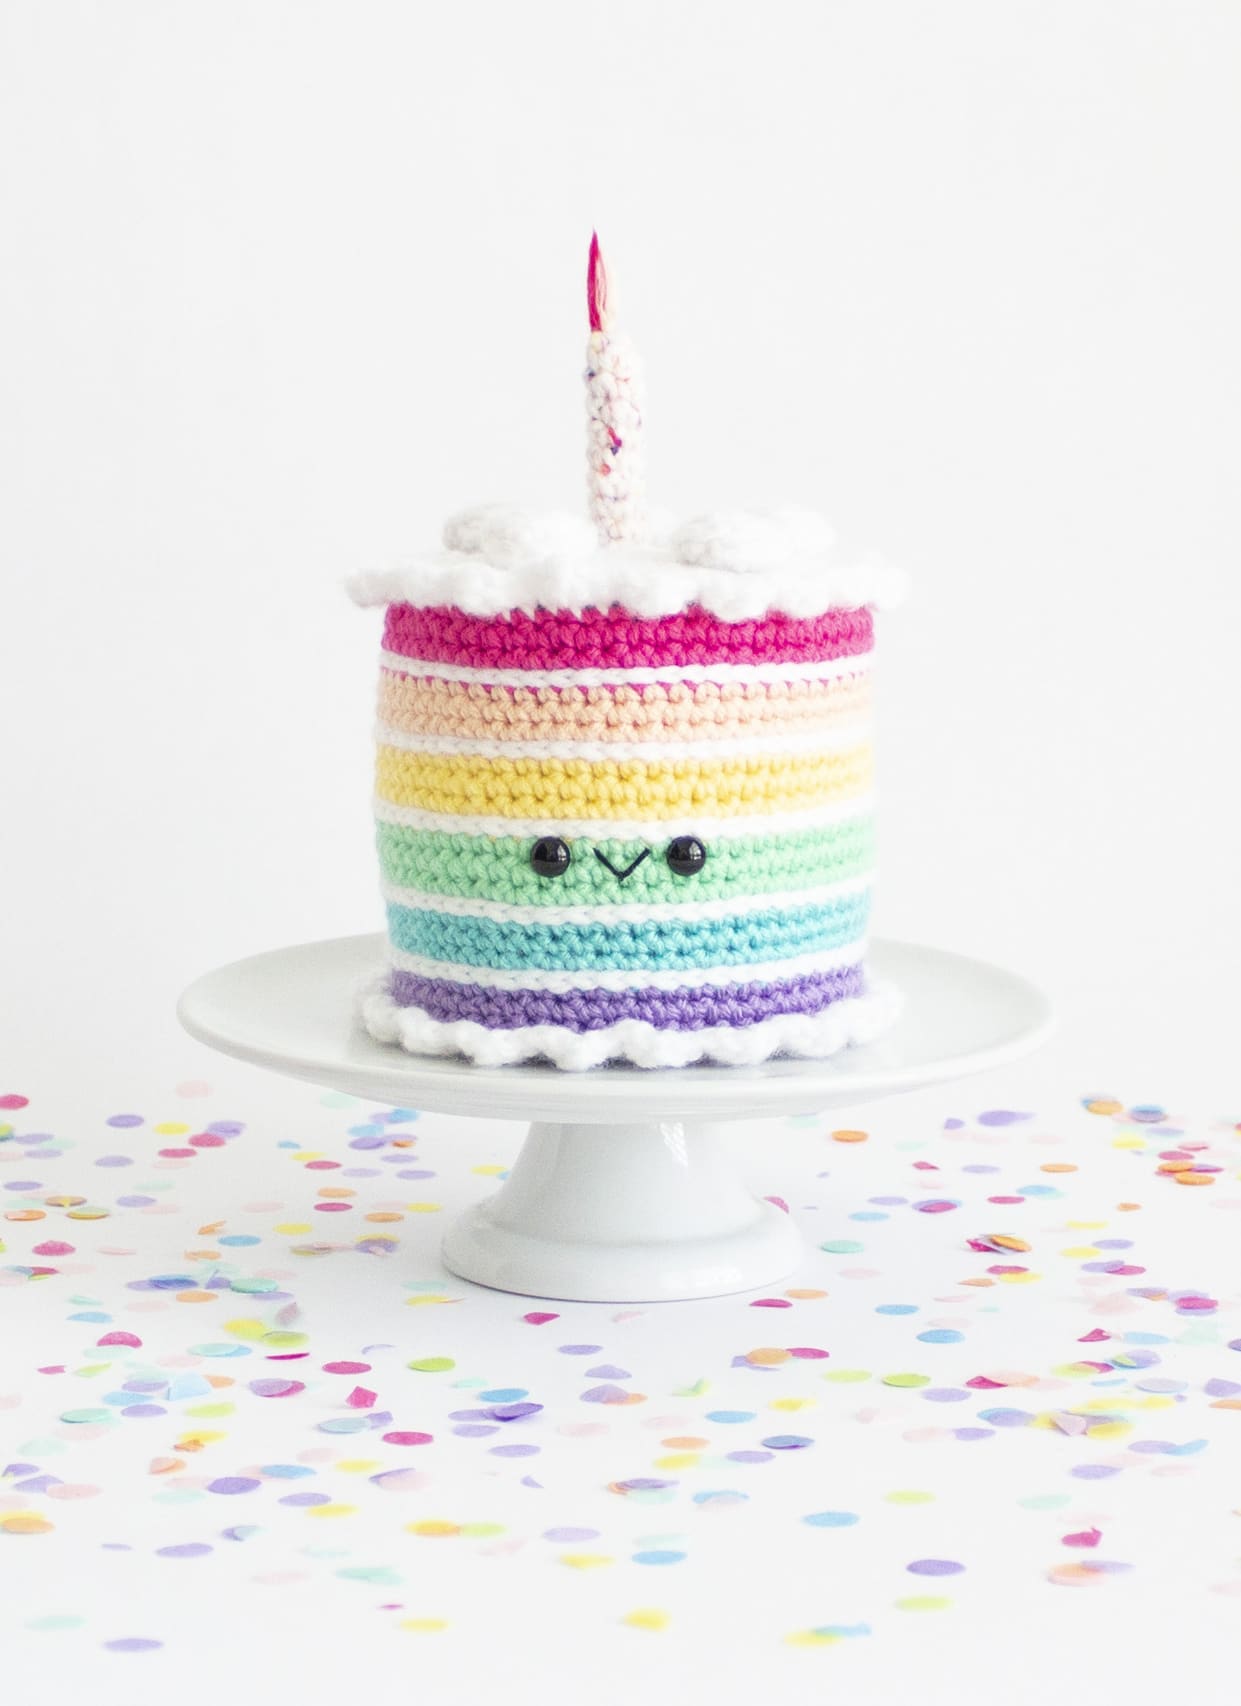 Cake Applique Design. Cake Embroidery Design. Cake Slice - Etsy | Applique  designs, Embroidery designs, Machine embroidery designs